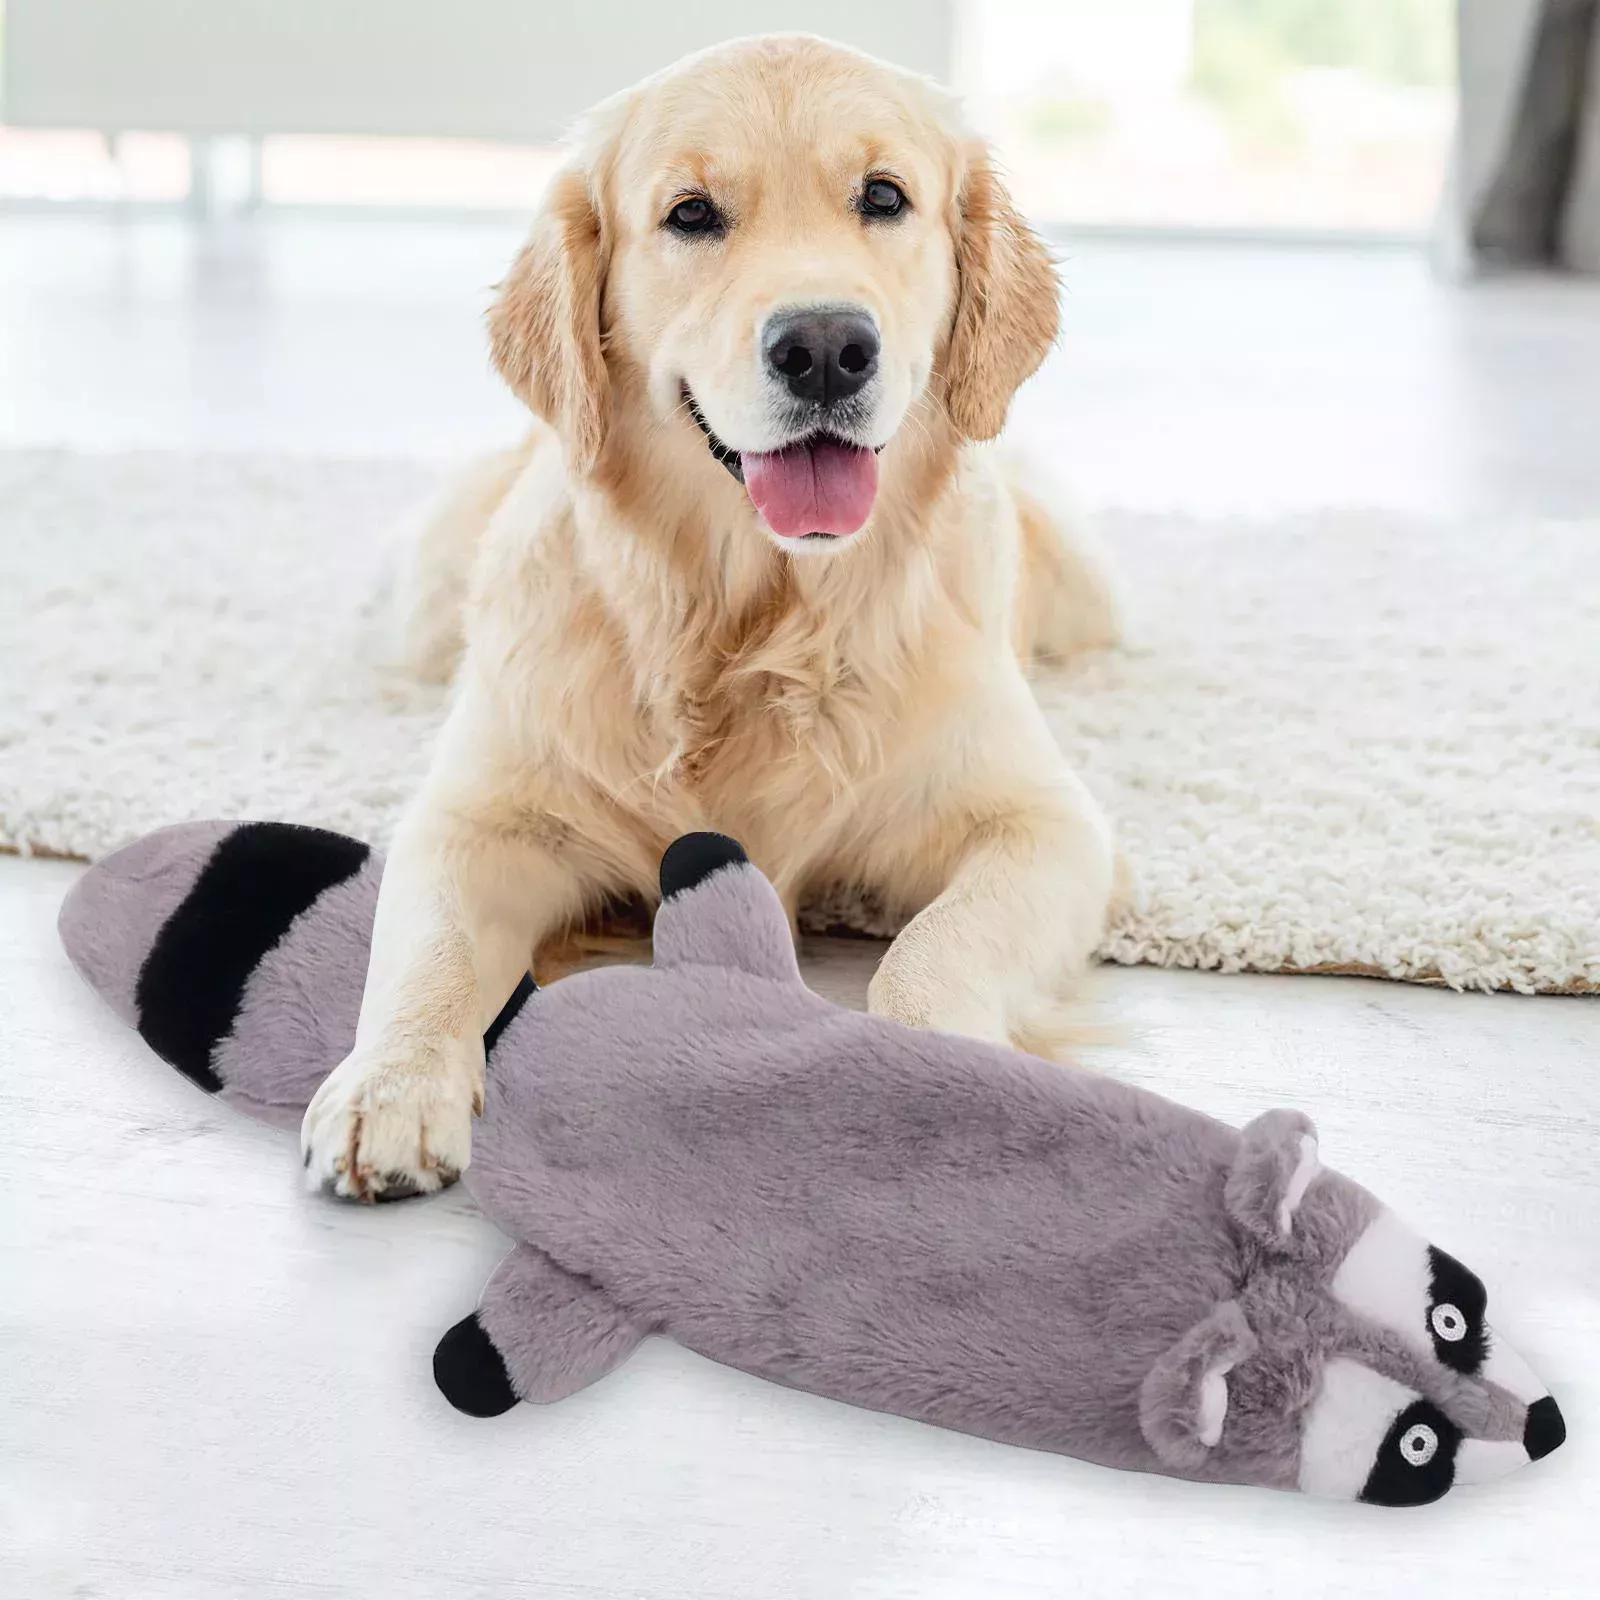 Hundespielzeug, Kauspielzeug für Hunde, Quietschspielzeug für Hunde, Tierspielzeug für Hunde